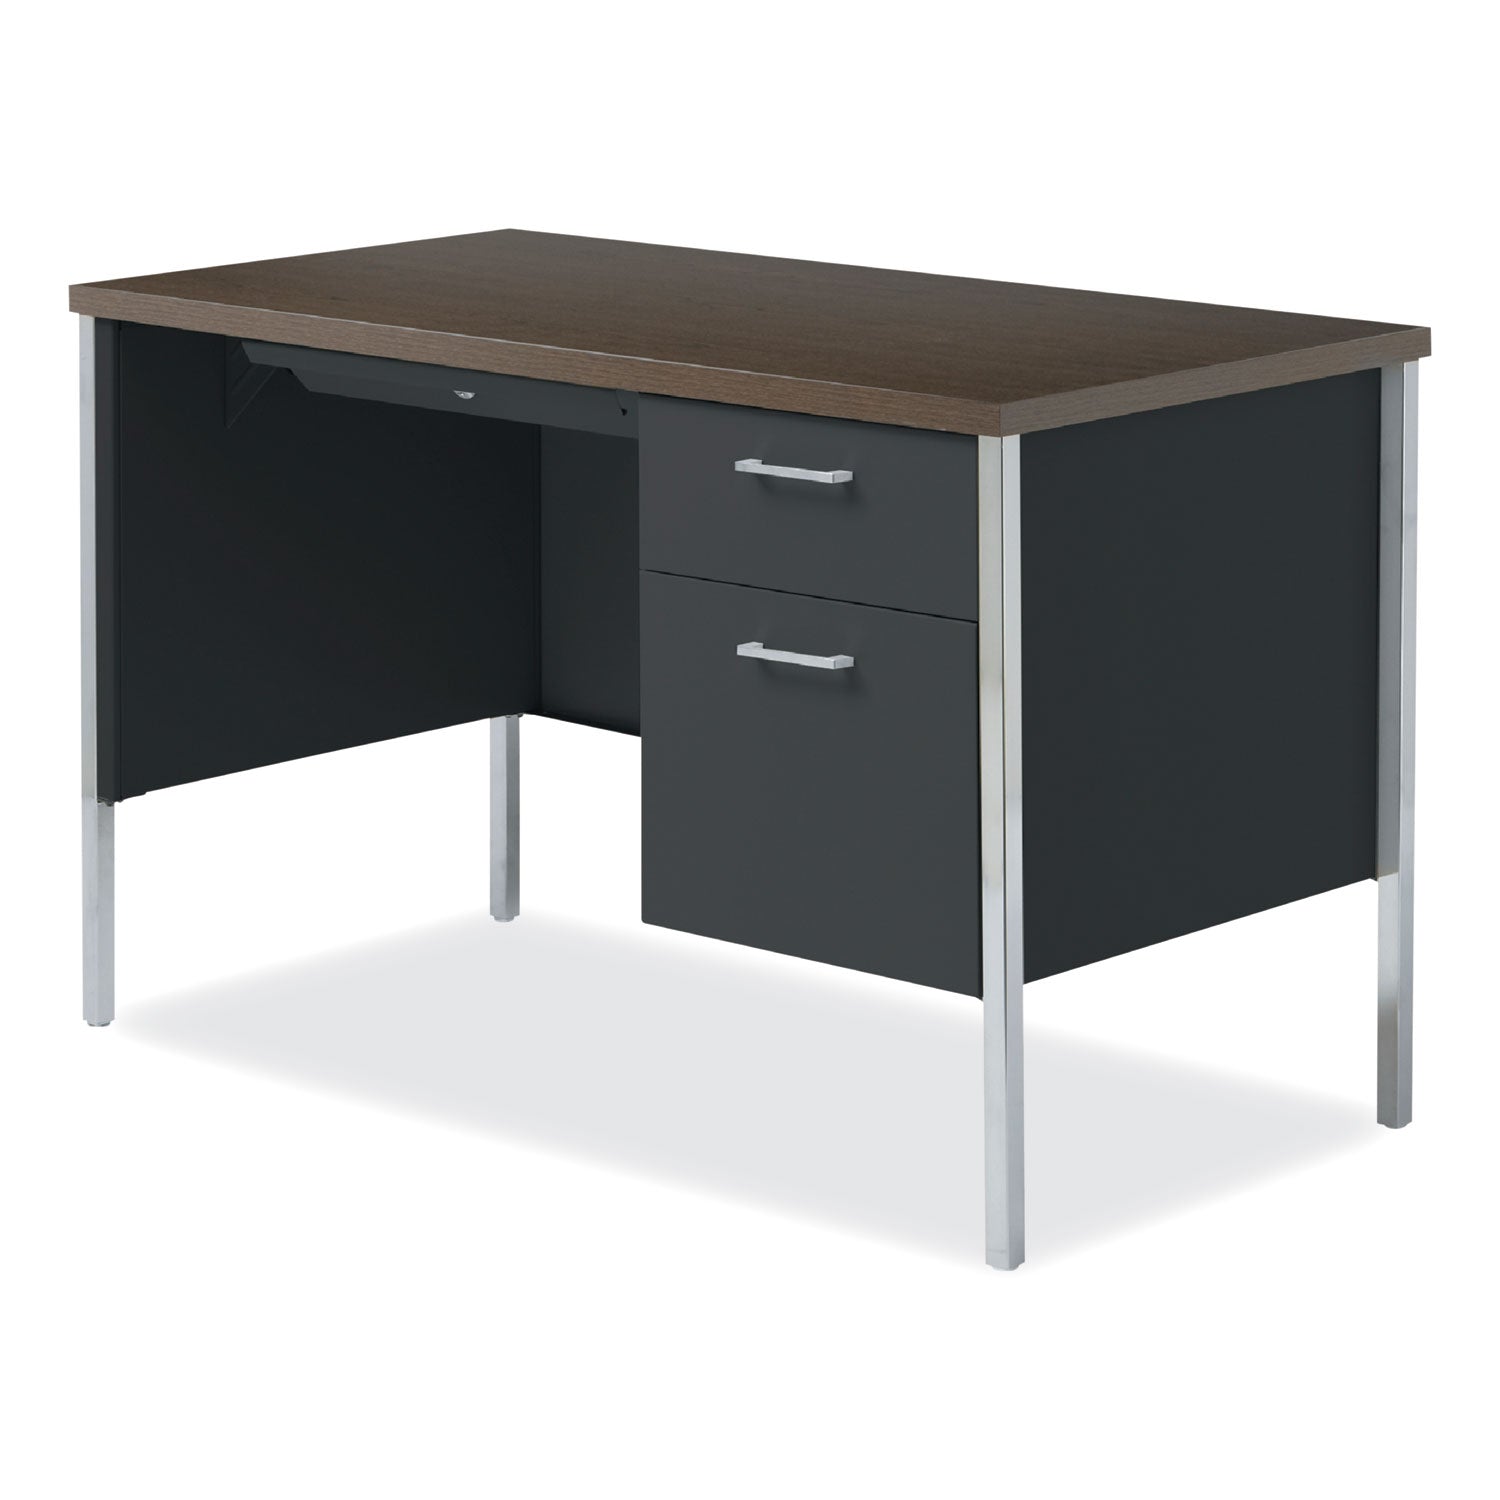 single-pedestal-steel-desk-4525-x-24-x-295-mocha-black-chrome-legs_alesd4524bm - 3